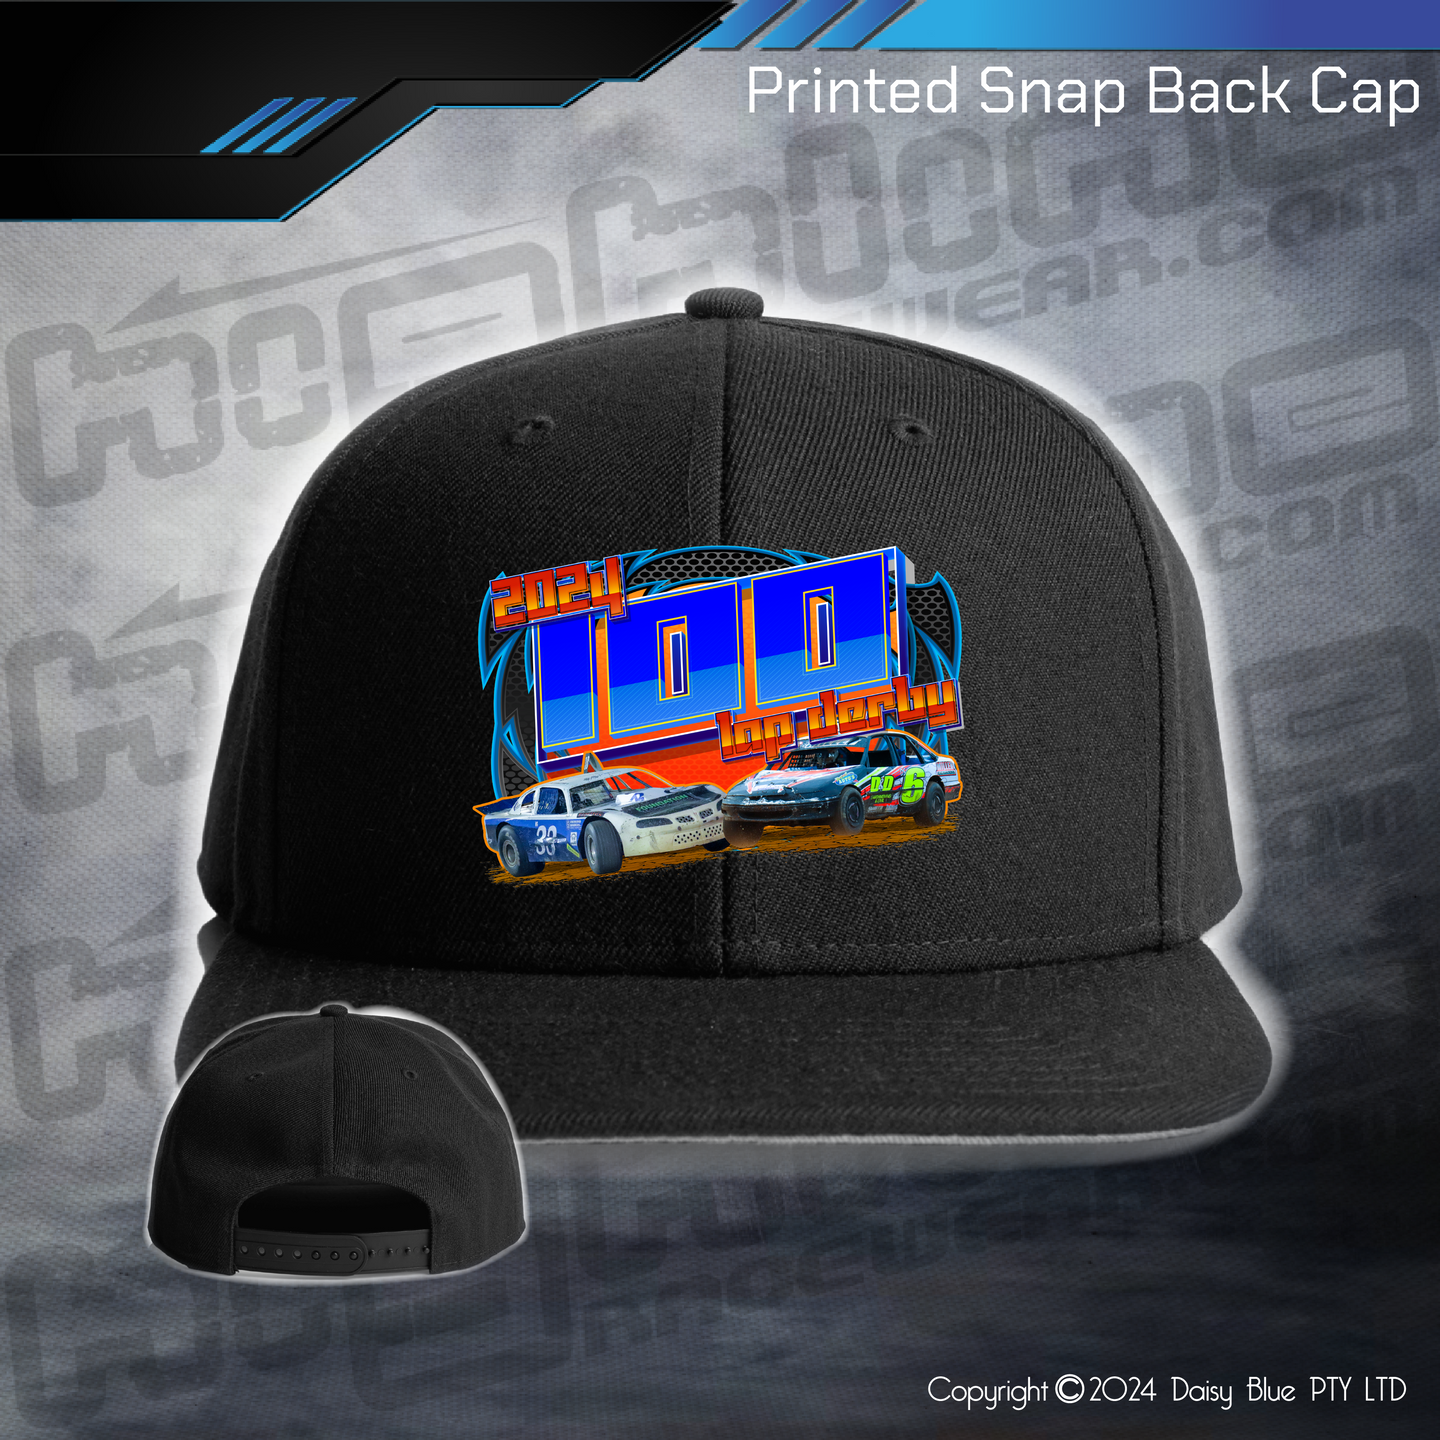 Printed Snap Back CAP - 100 Lap Derby 2024